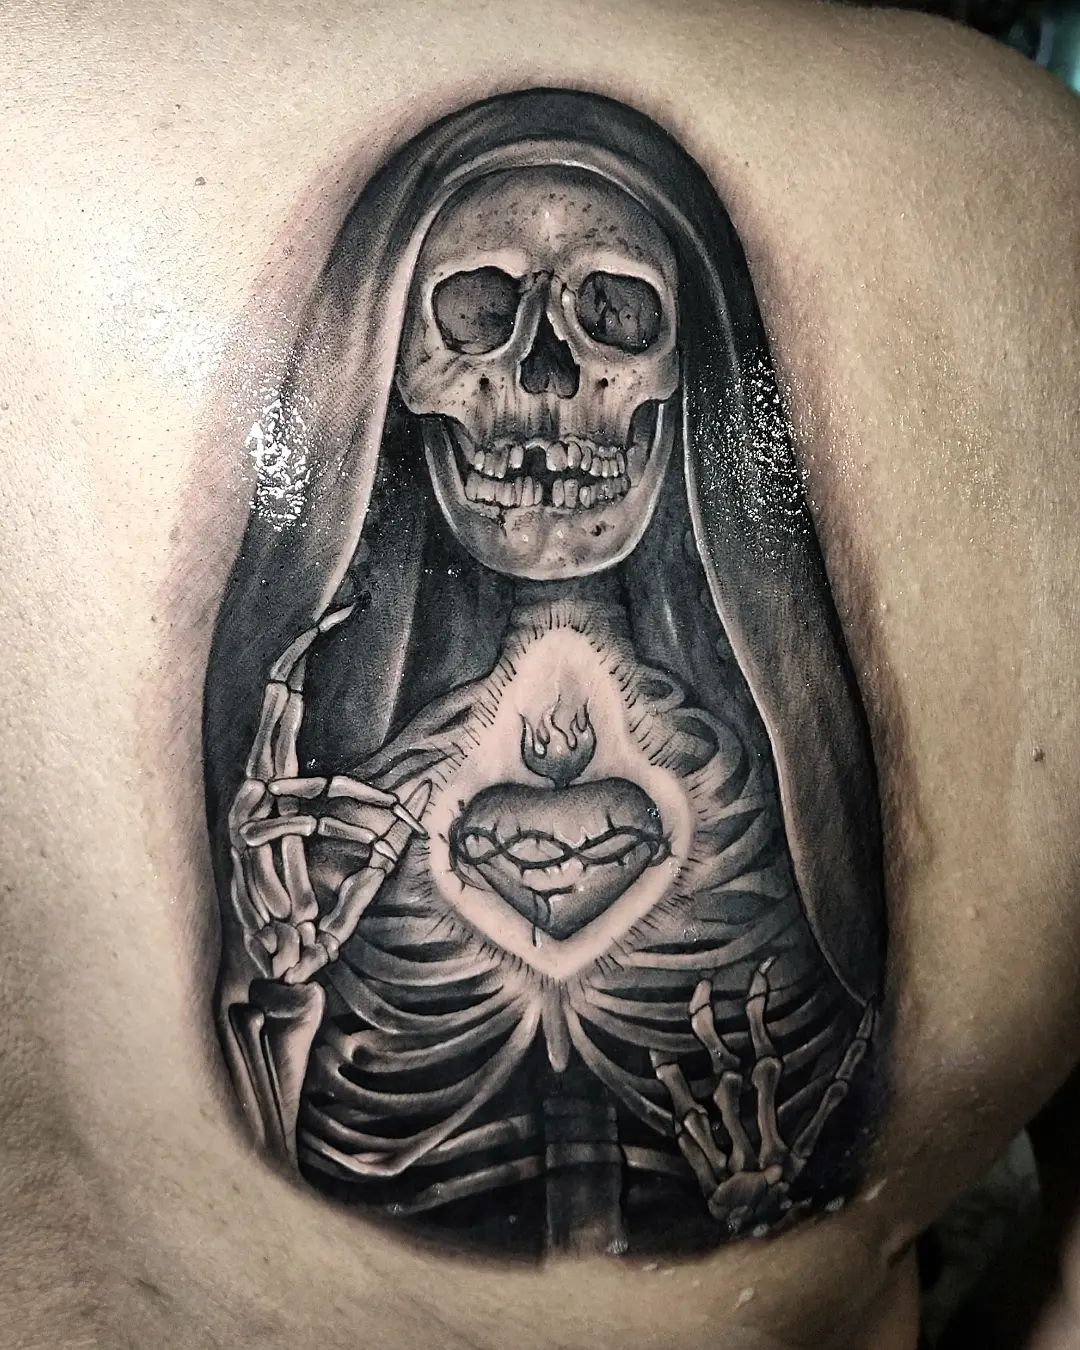 Diseño de Tatuaje Gigante de Santa Muerte en la Espalda